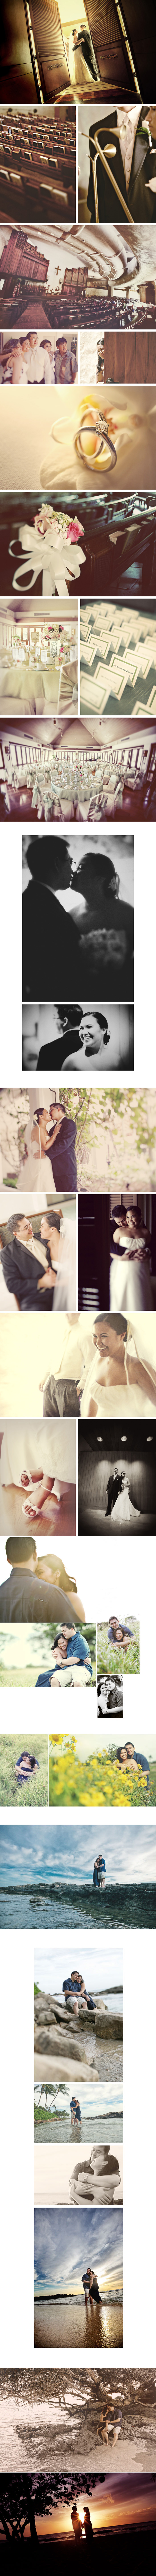 Shawn Starr : Modern Wedding Photography : Pittsburgh Wedding Photographer : Lanikuhonua